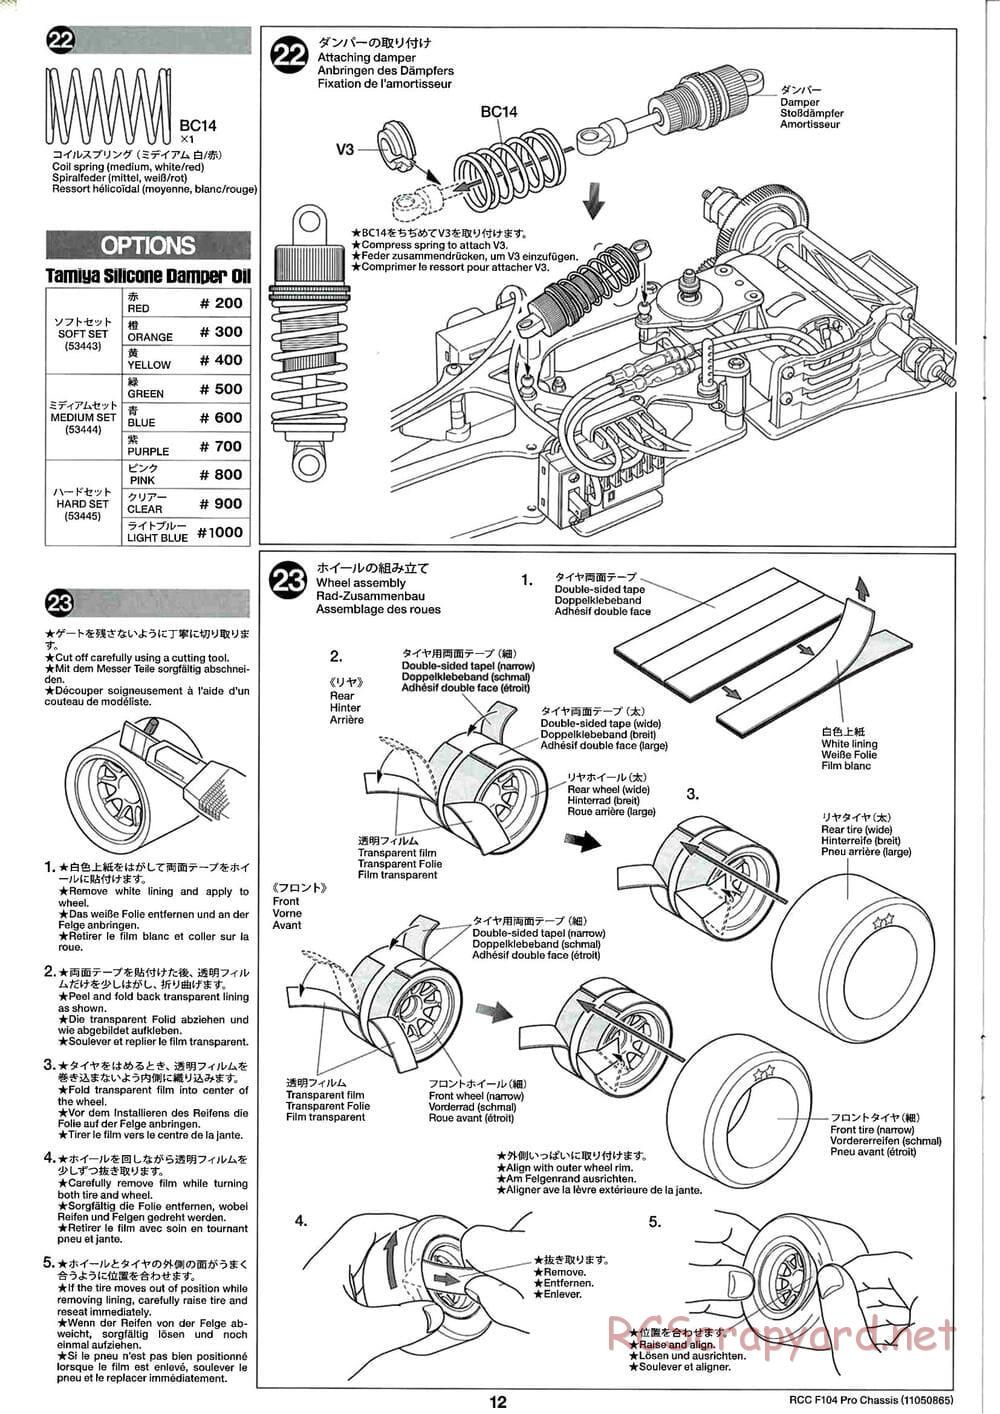 Tamiya - F104 Pro Chassis - Manual - Page 12